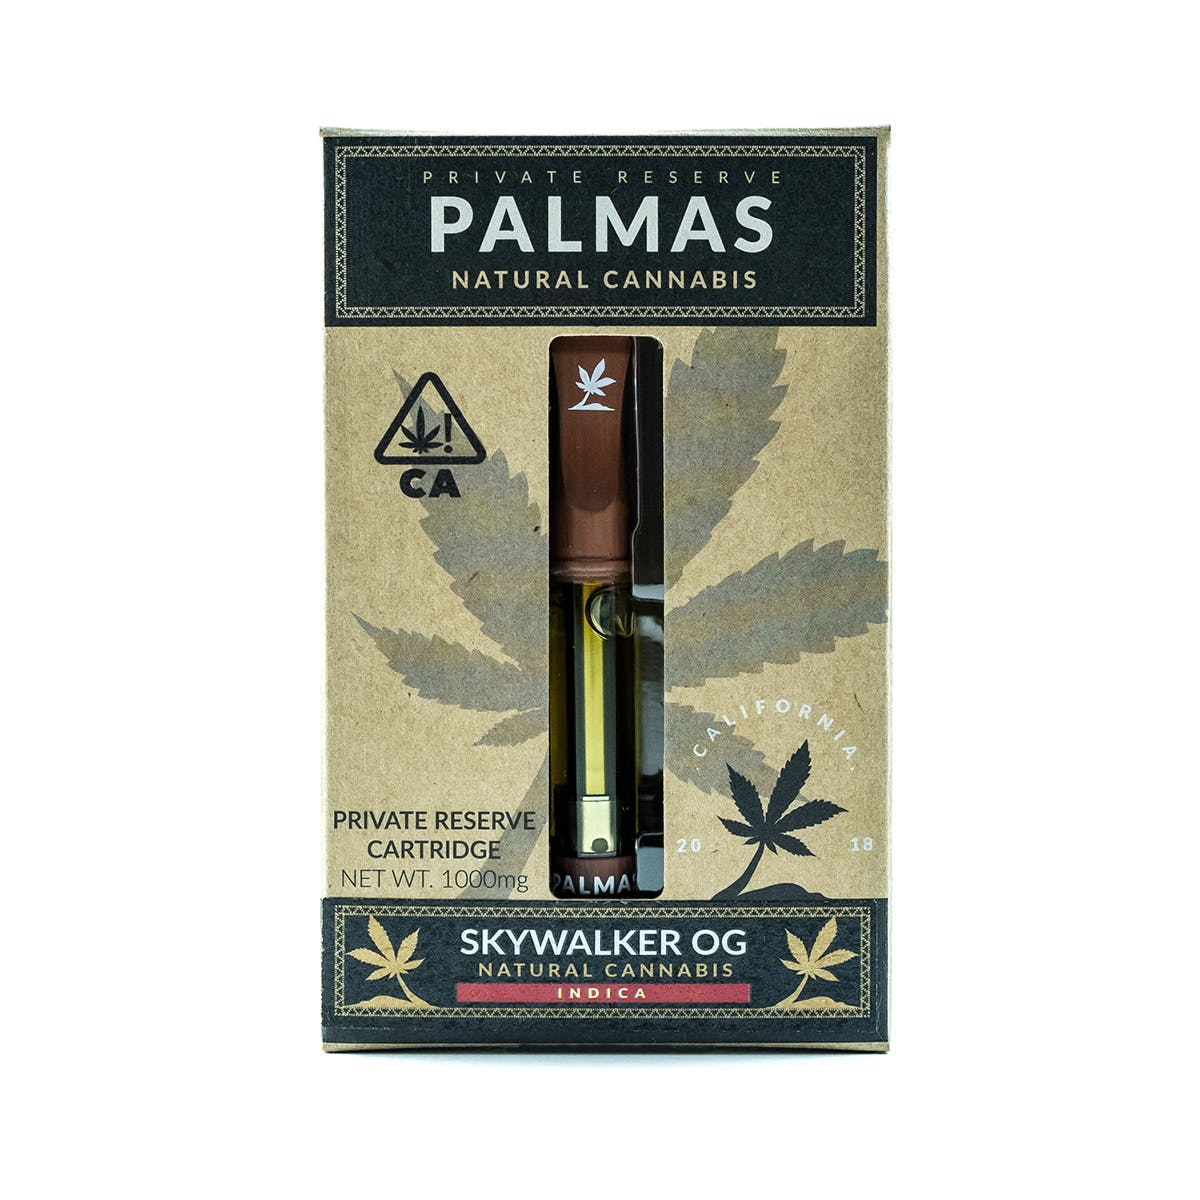 concentrate-palmas-cannabis-palmas-private-reserve-cartridge-skywalker-og